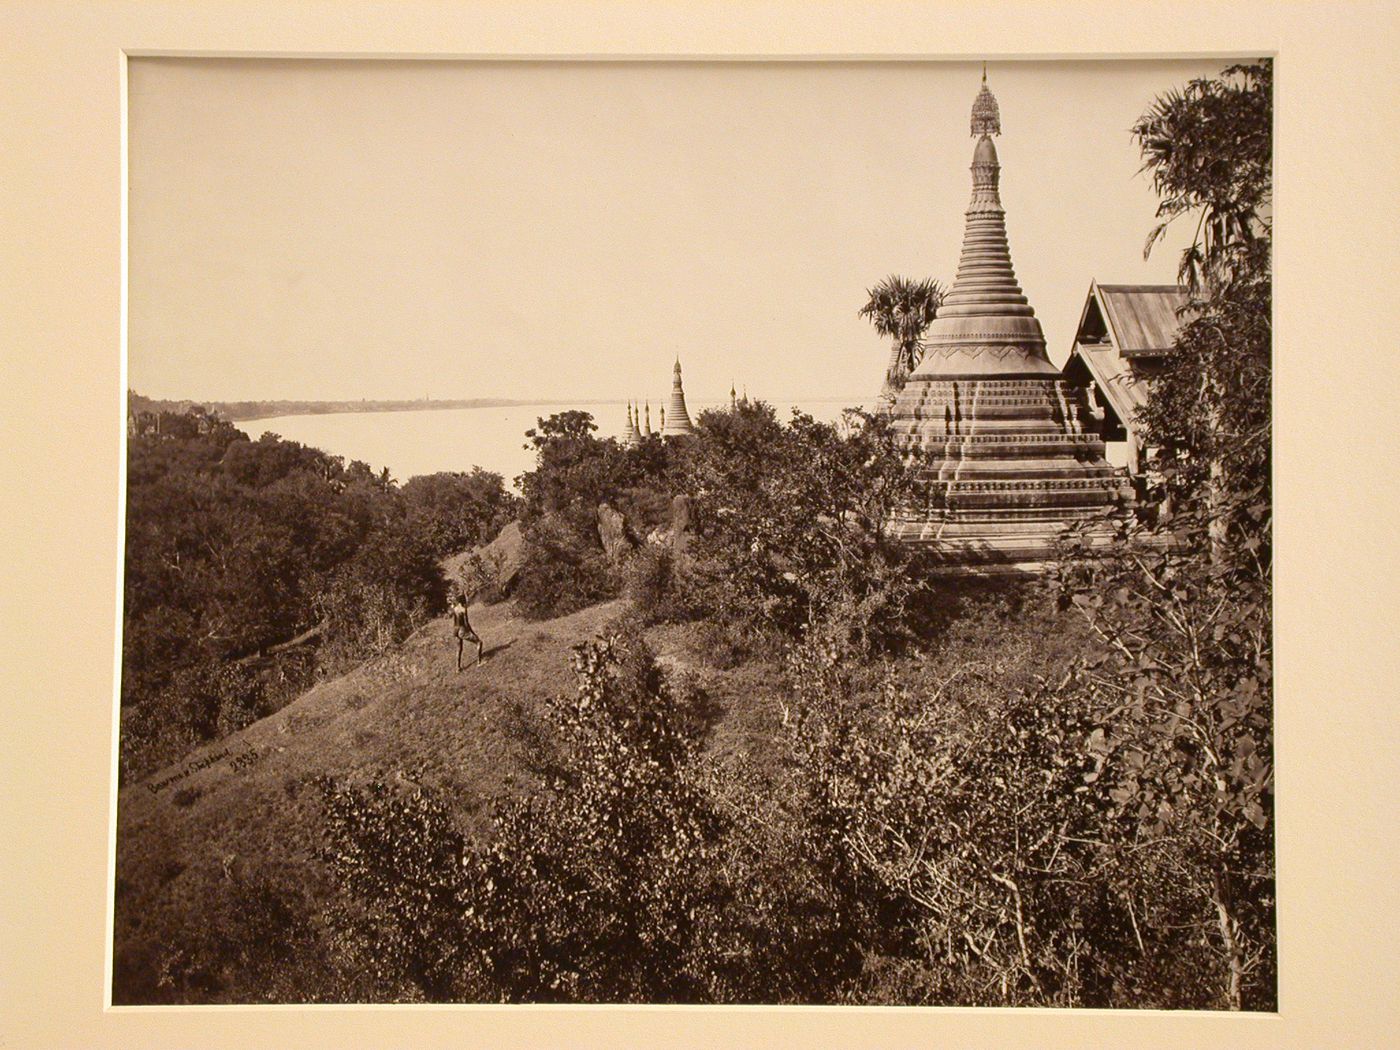 View of Mya Thalun [?] Pagoda on the banks of the Irrawaddy River, Magwe, Burma (now Myanmar)